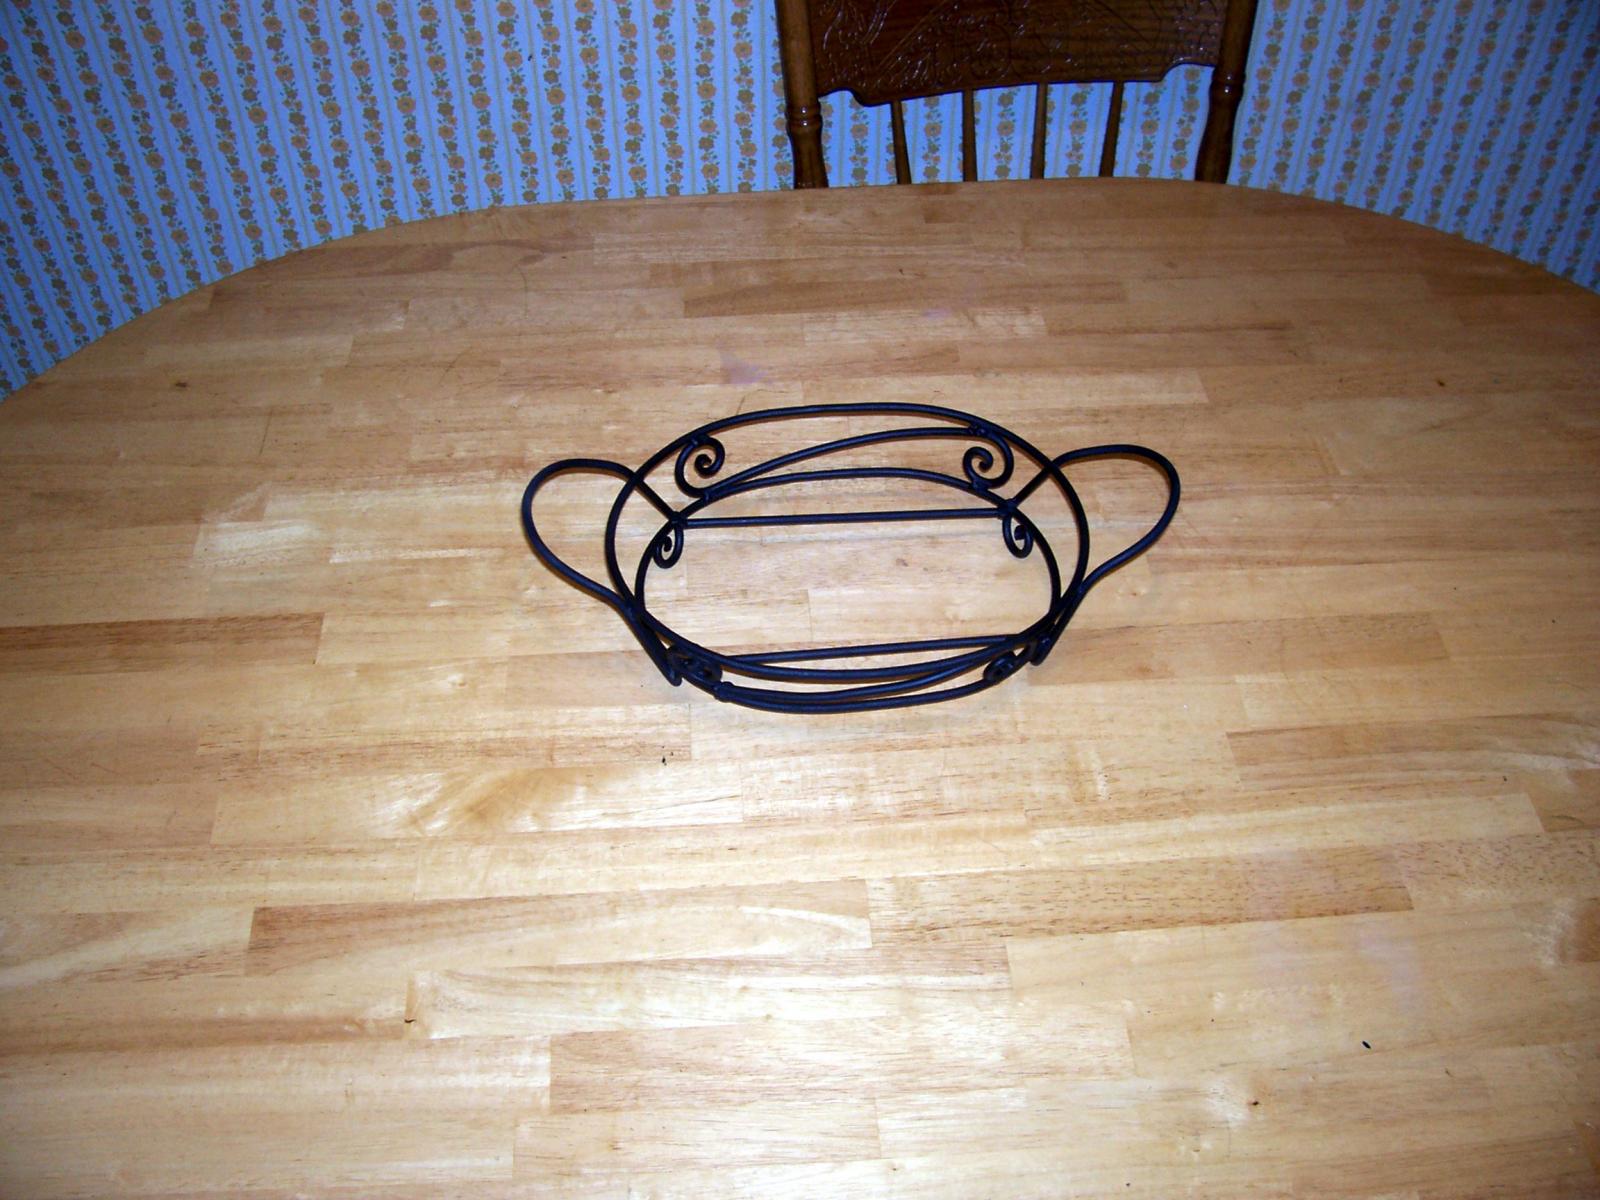 Oval Casserole dish Holder